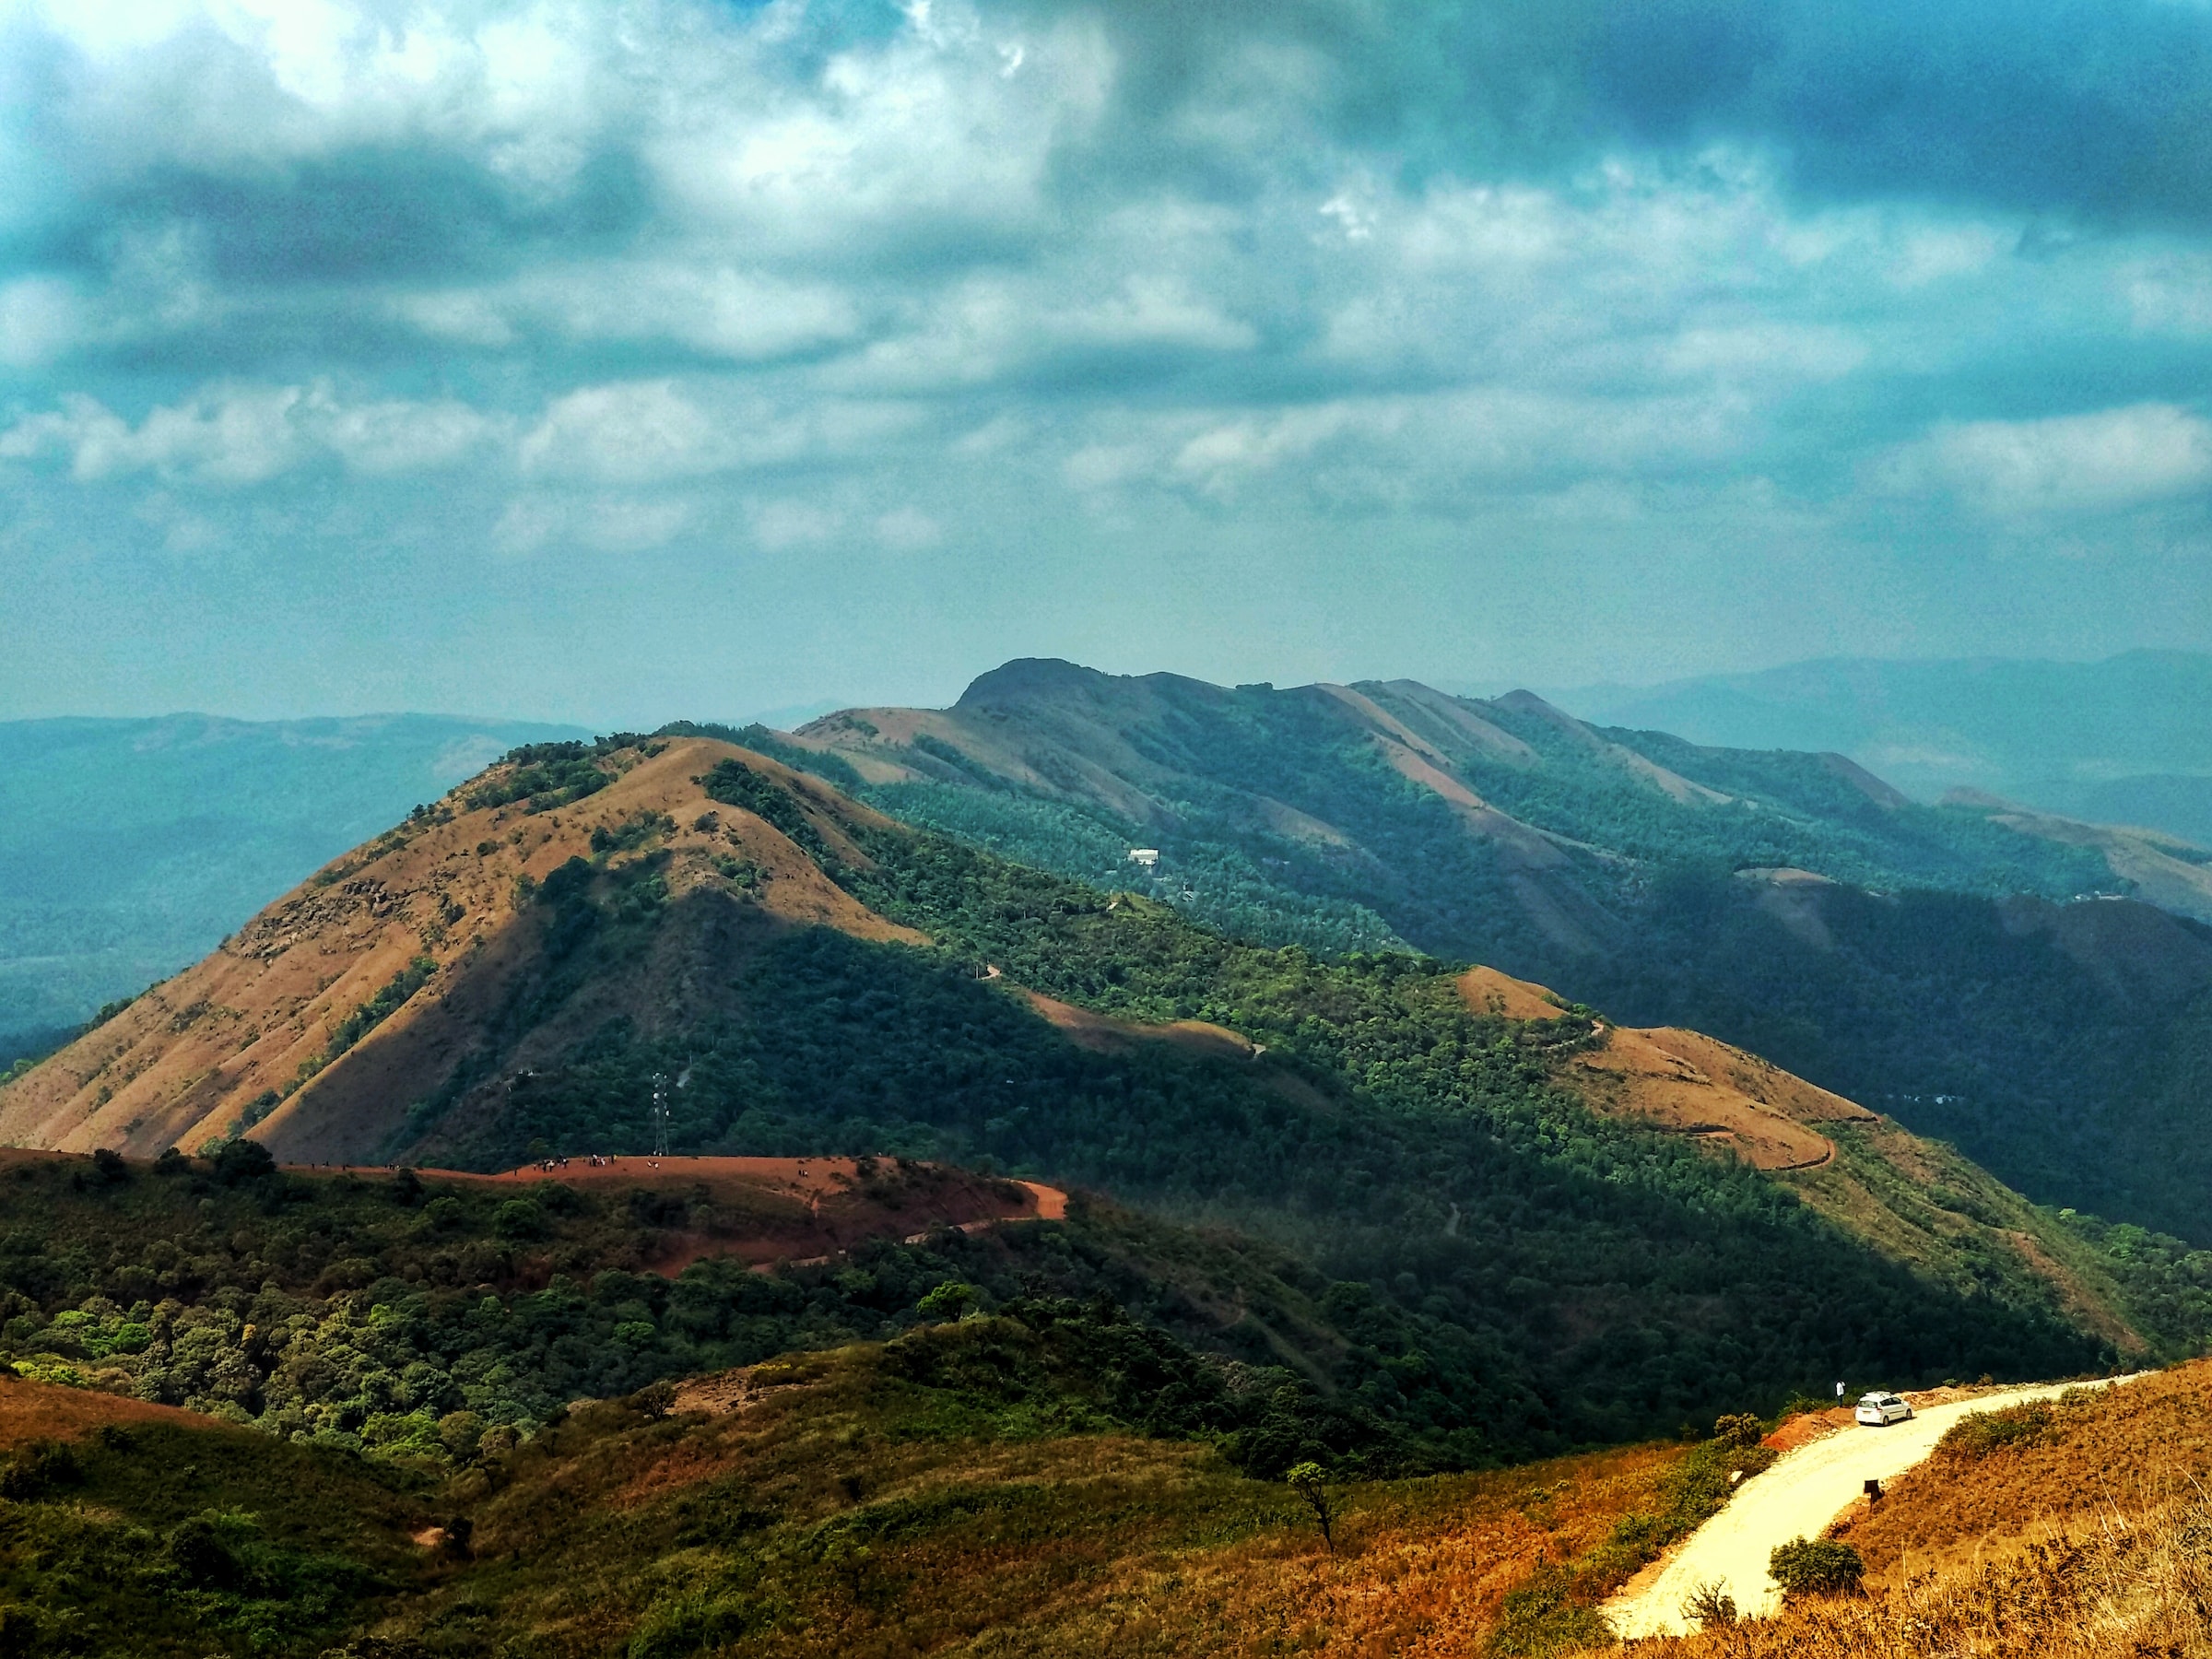 Karnataka is a treasure trove of unexplored hill stations perfect for quick little summer getaways. (Madhav/unsplash.com)